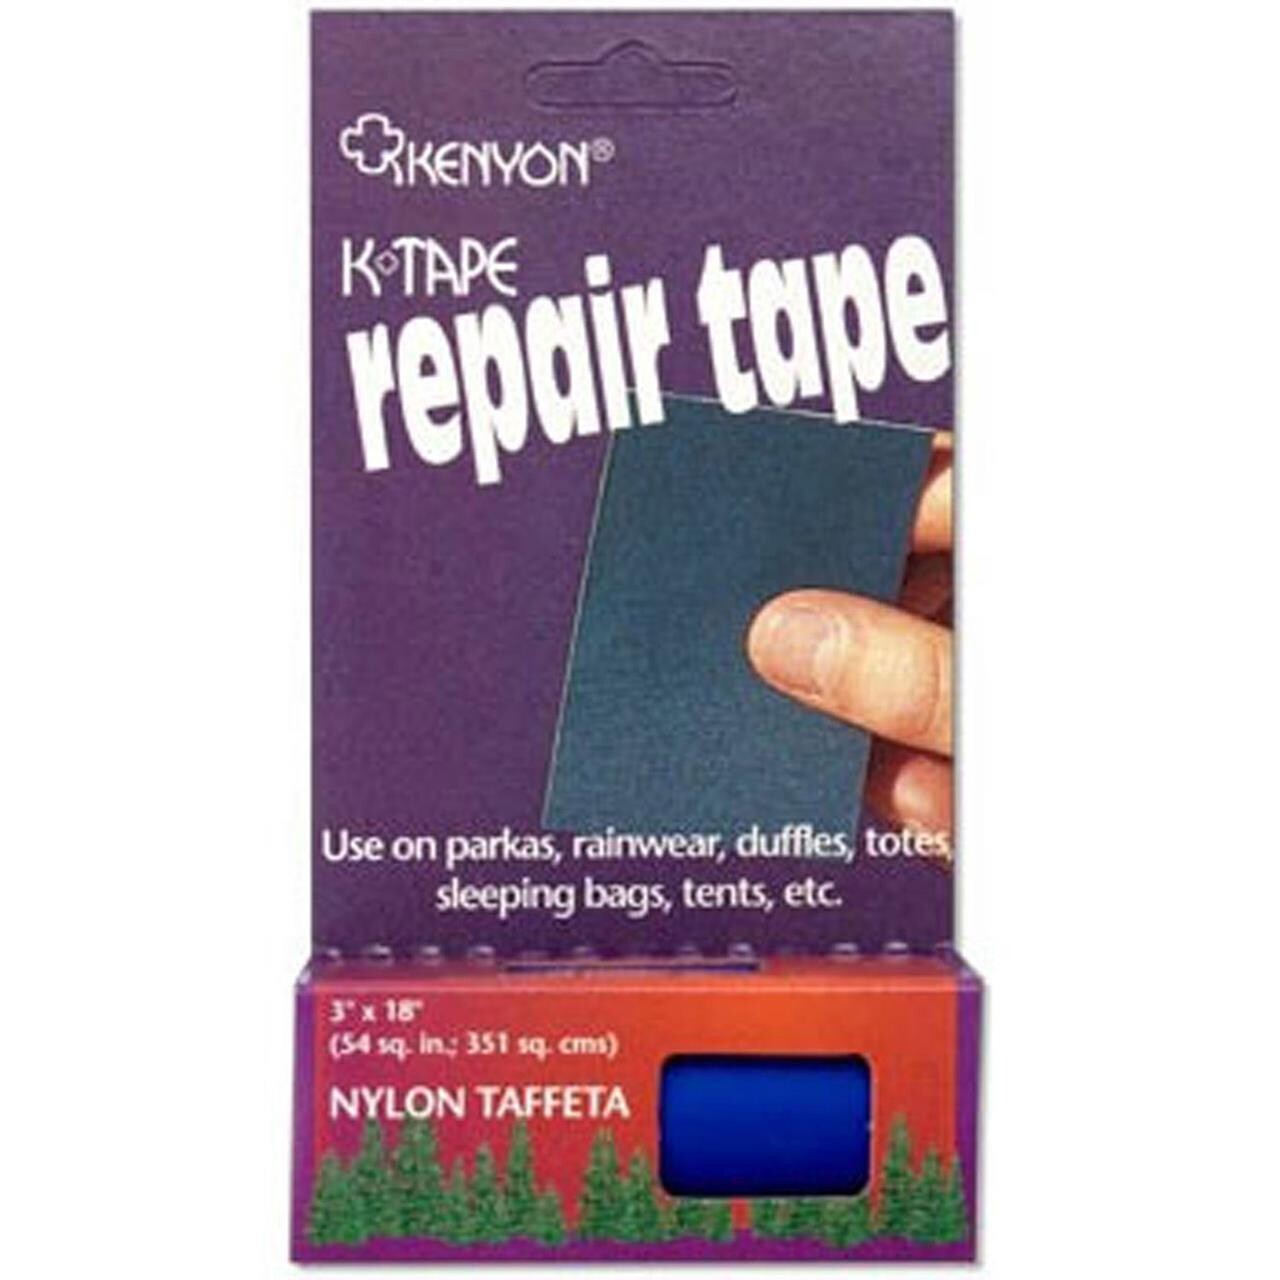 Kenyon Repair tape Ripstop 3x18" (Blå (ROYAL BLUE))